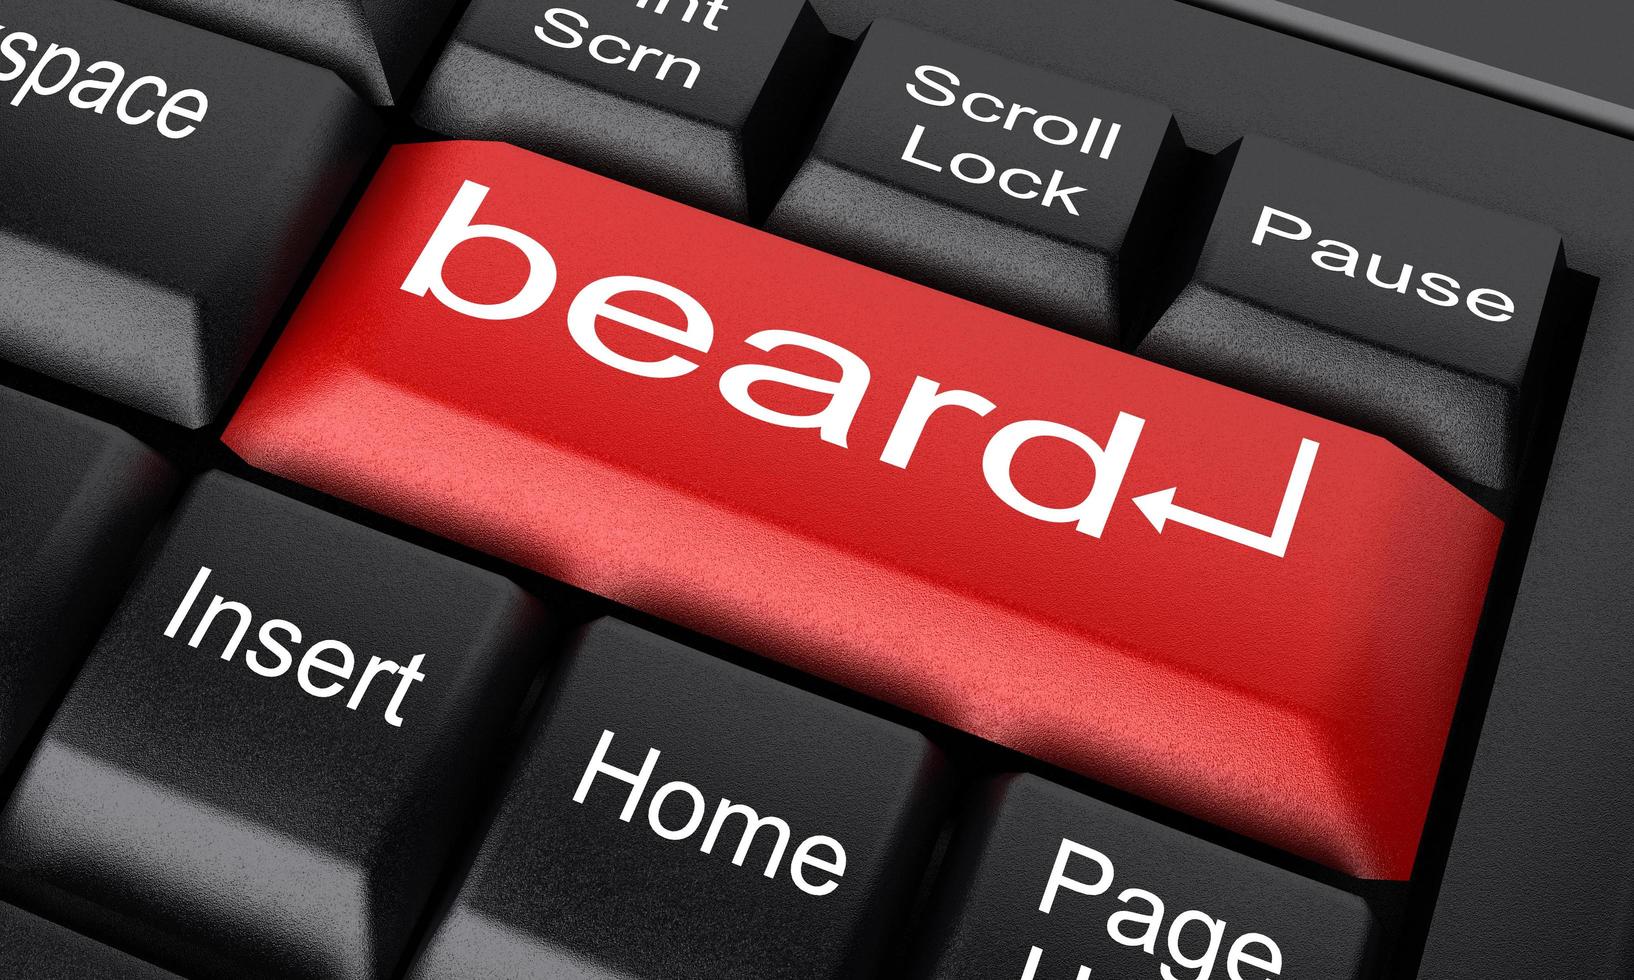 beard word on red keyboard button photo